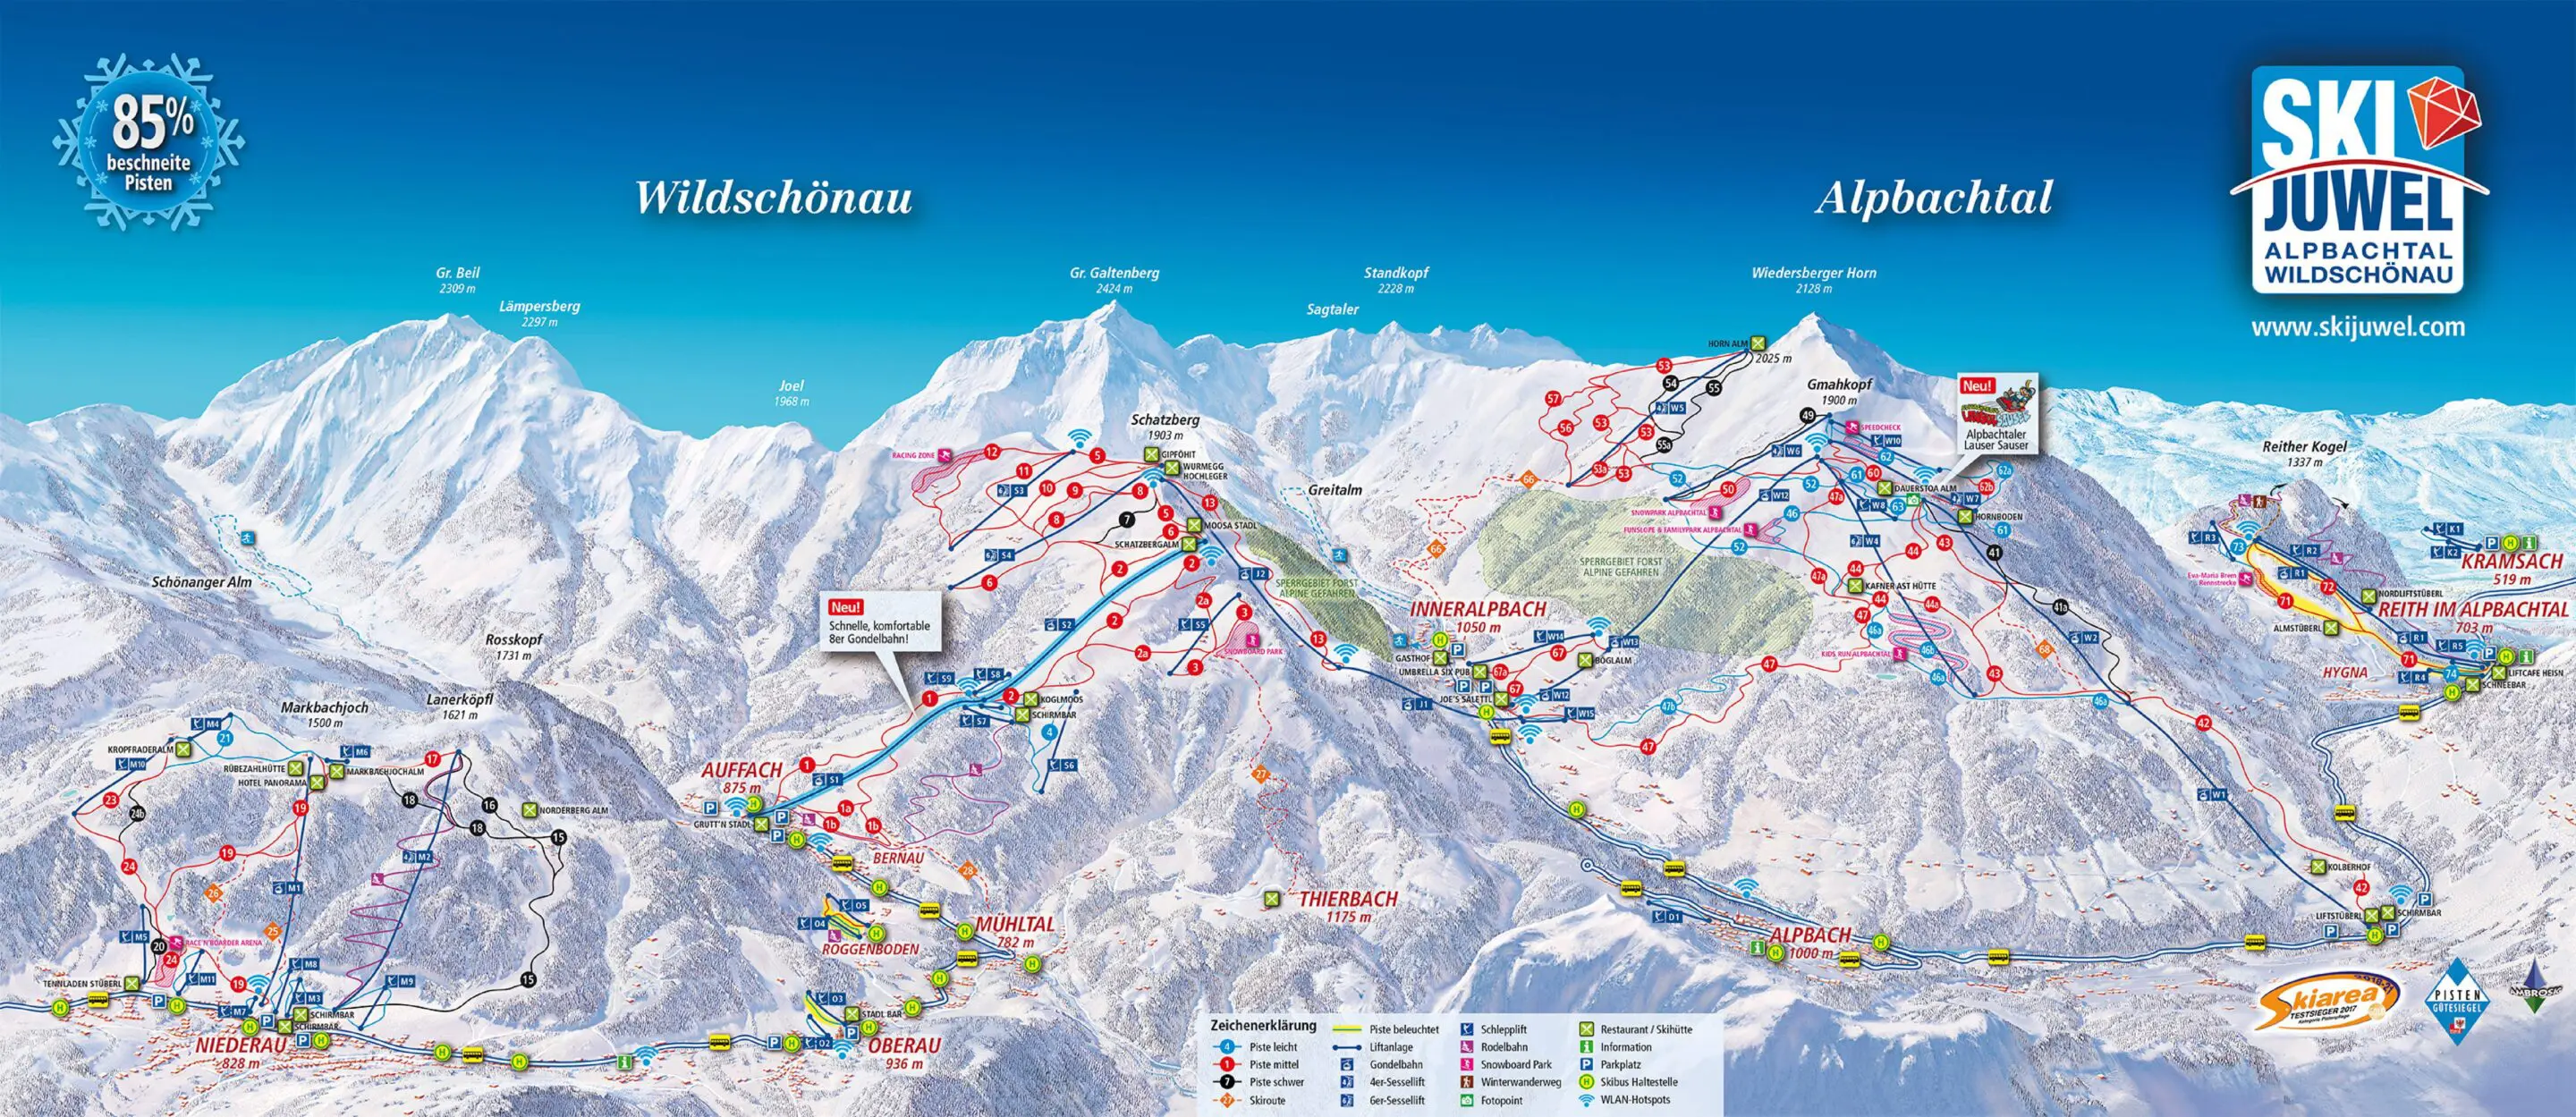 Østrig SkiJuwel Alpbachtal Wildschoenau PisteMap 2018 1 scaled